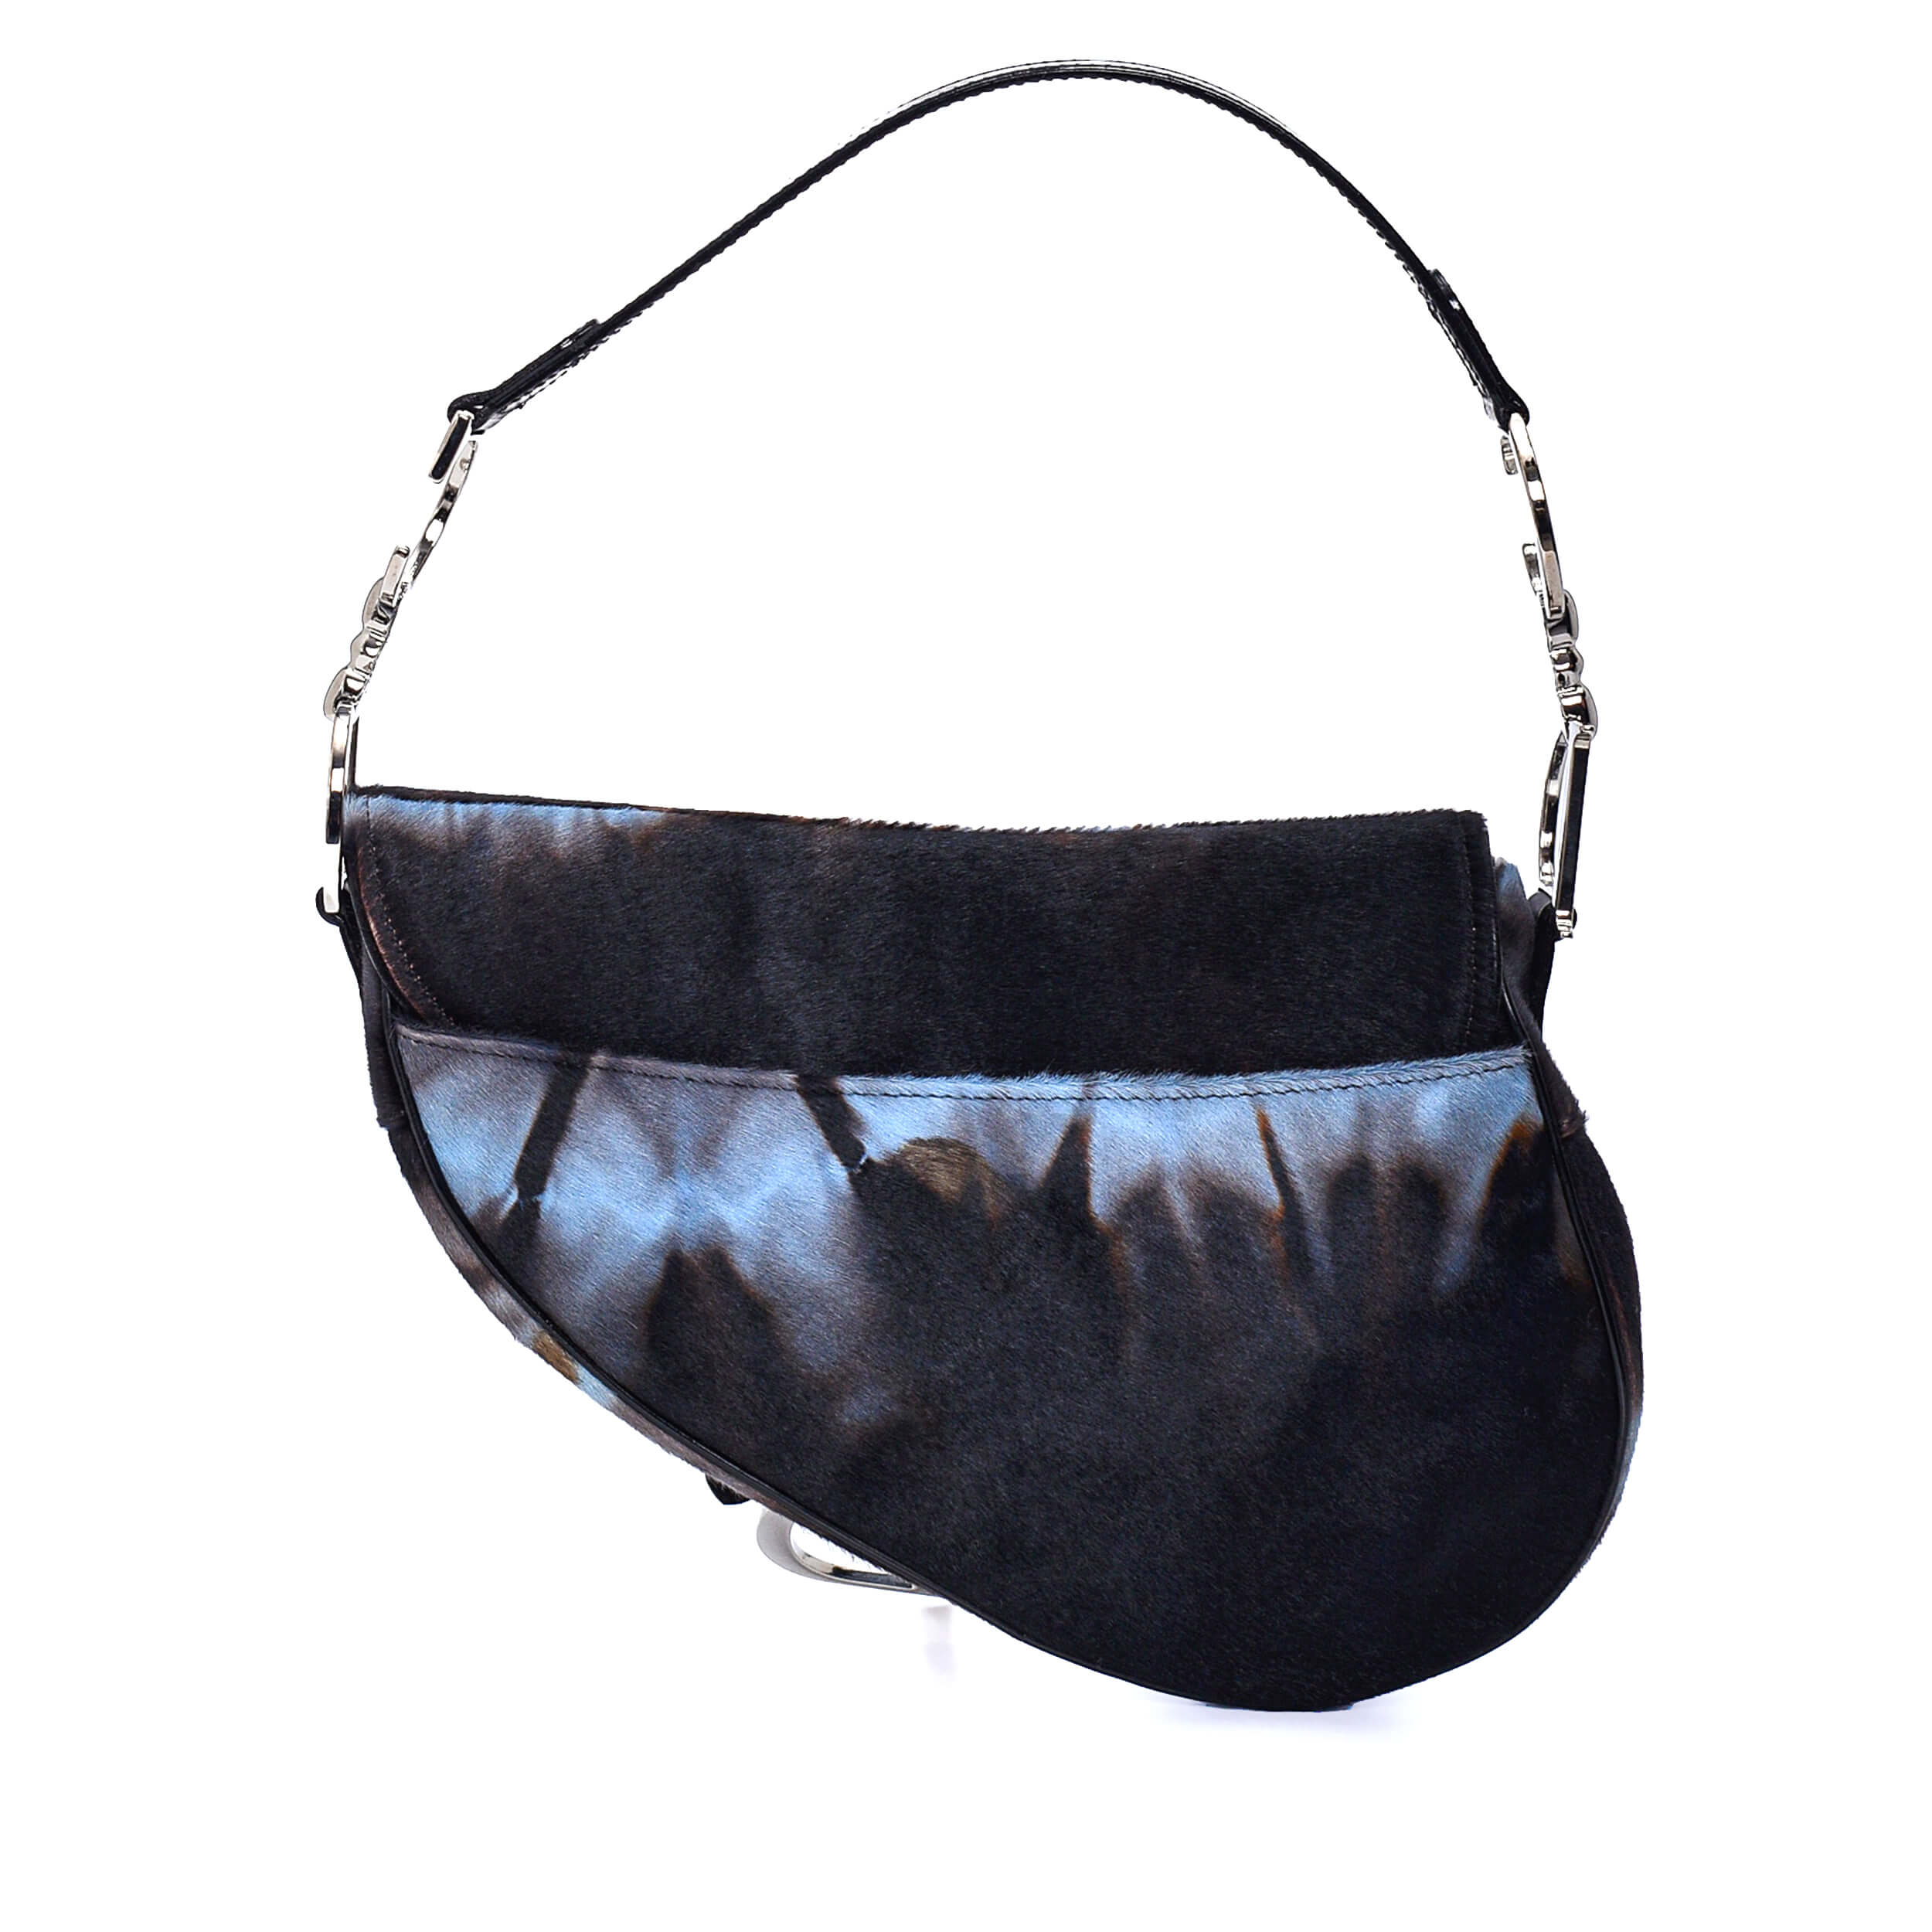 Christian Dior - Black &Turquoise Pony Hair Saddle Bag